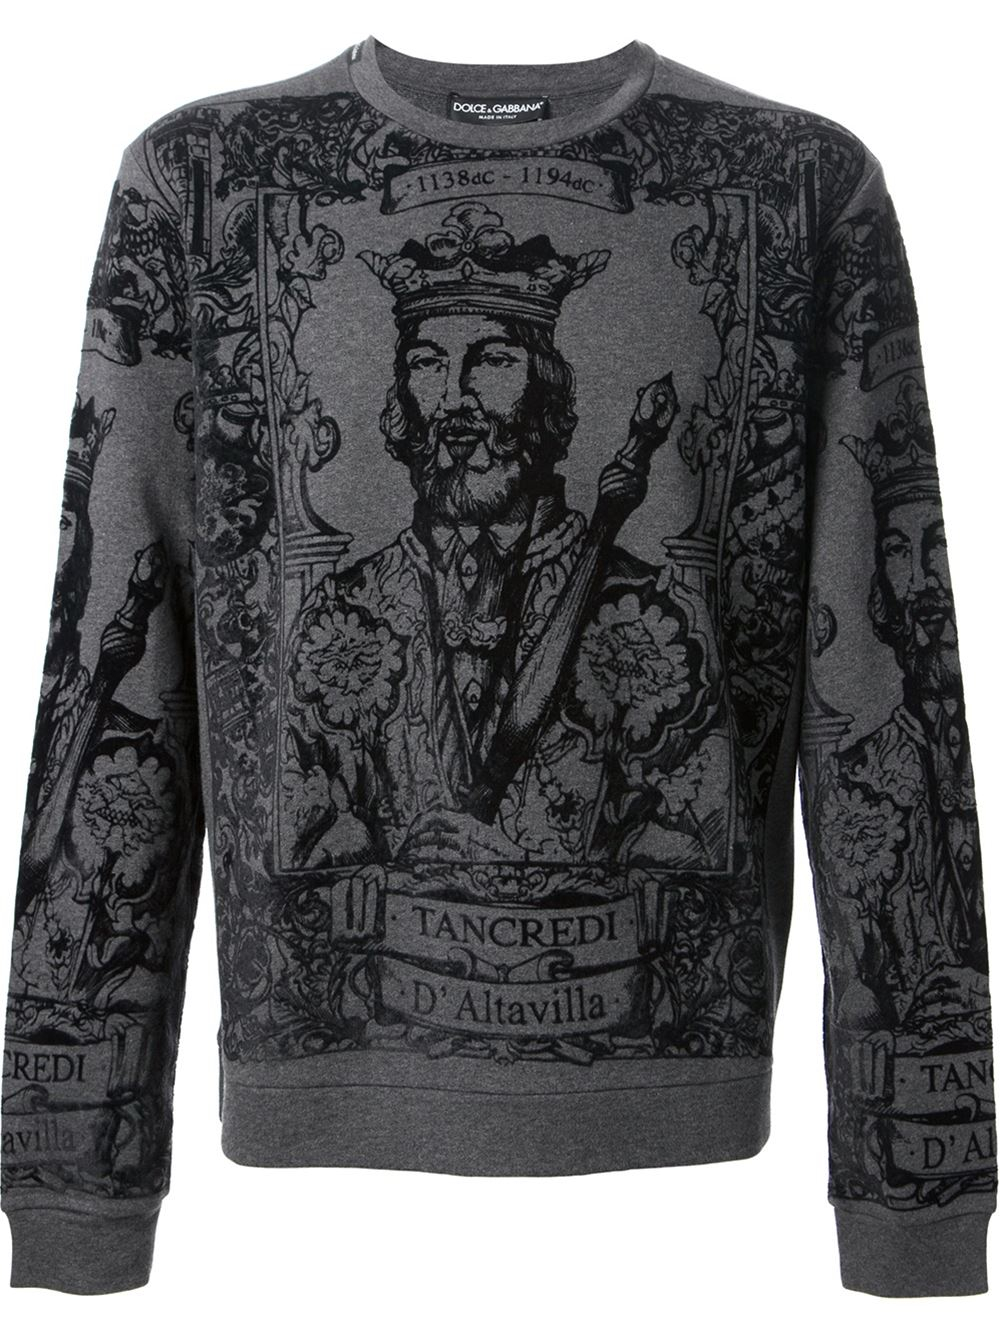 Dolce & Gabbana King Print Sweatshirt in Grey (Gray) for Men - Lyst